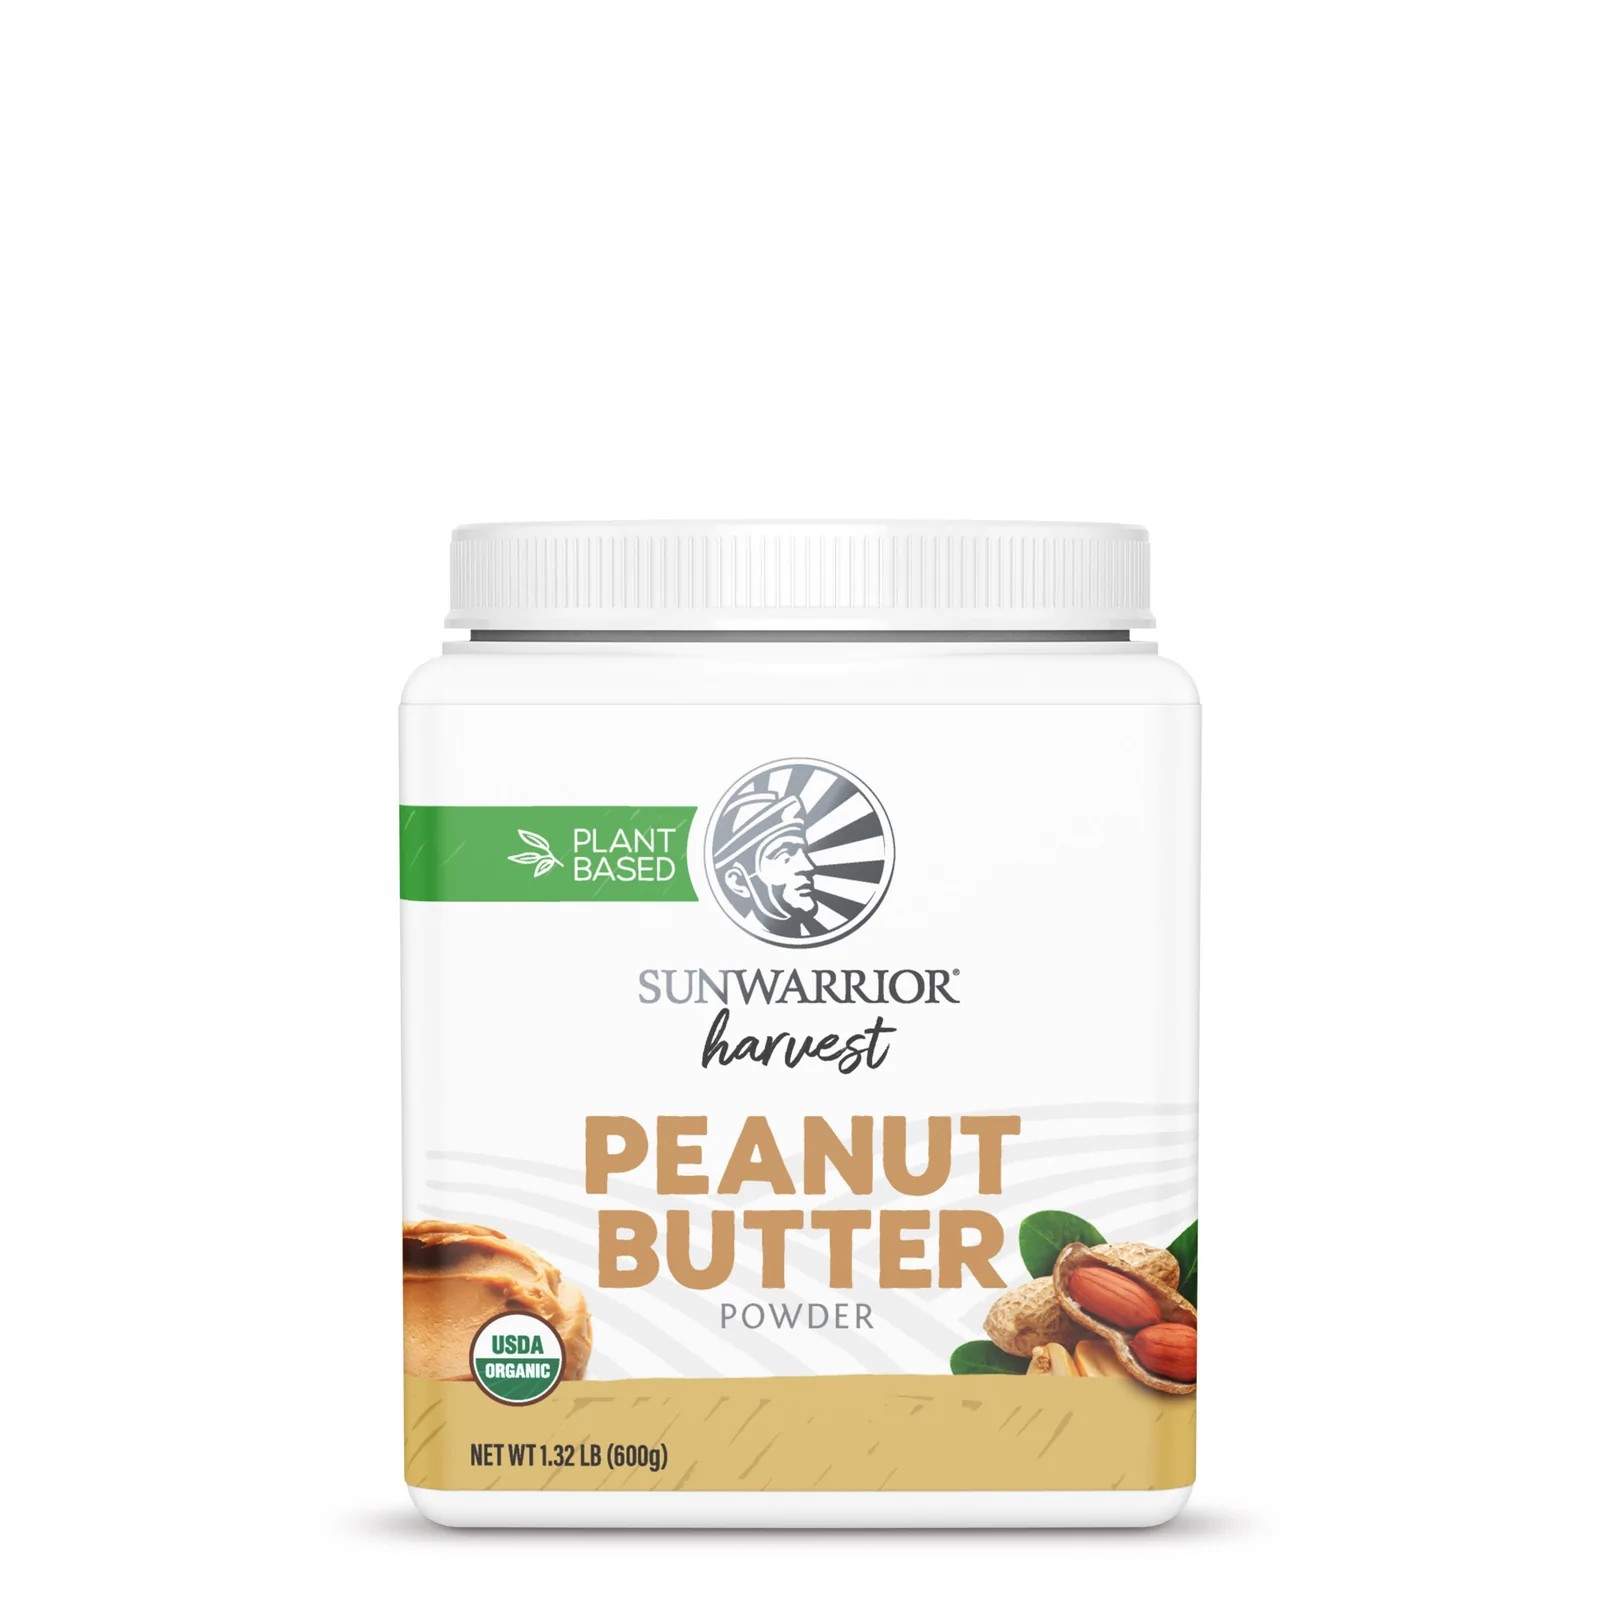 sunwarrior peanut butter powder 1